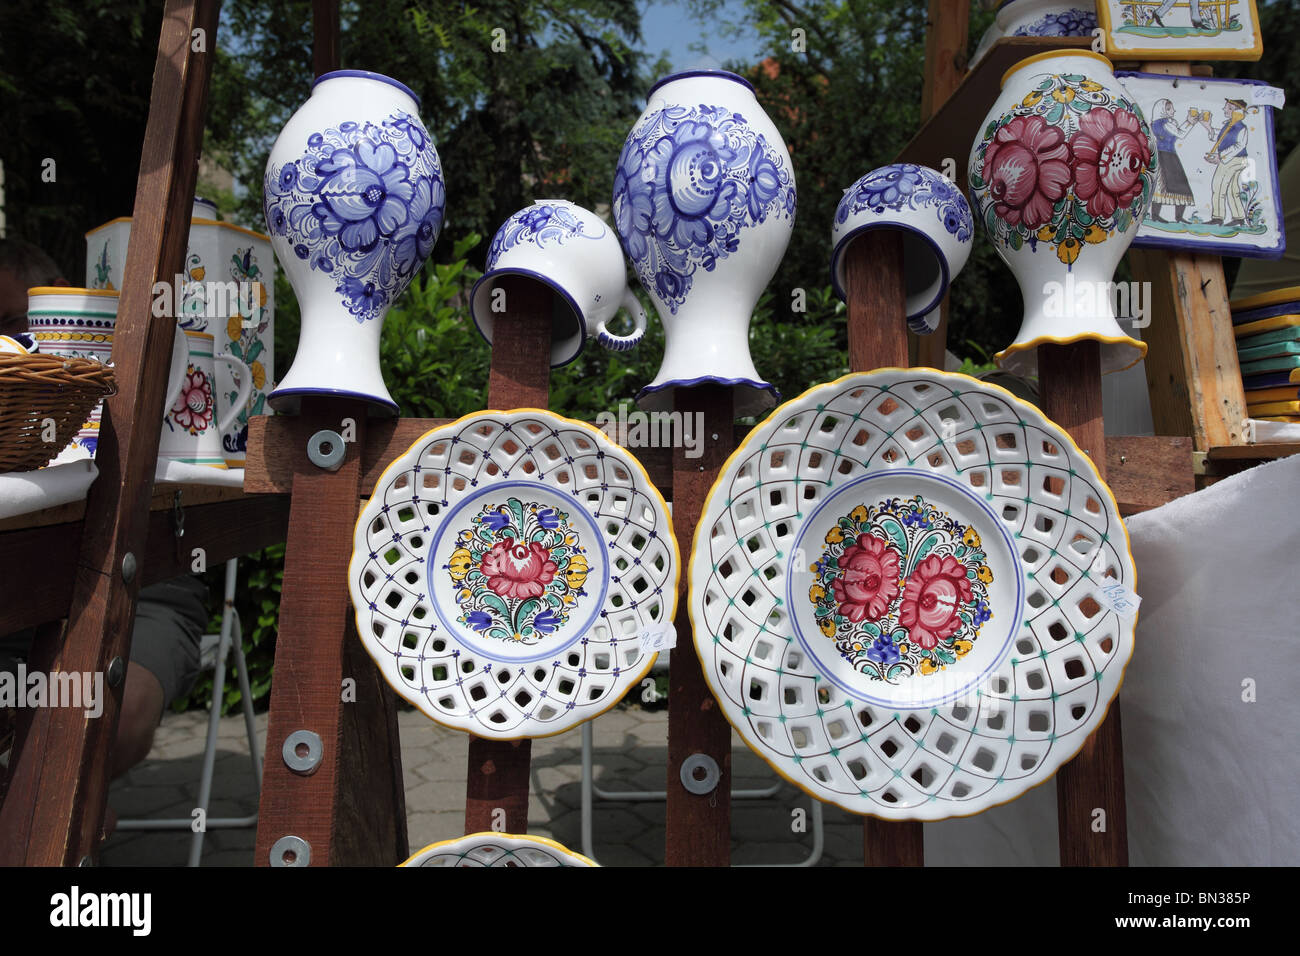 Keramik, bekannt als "Modranska Keramika" auf dem Display in das Keramik-Handwerk Messe in Pezinok, Slowakei. Stockfoto